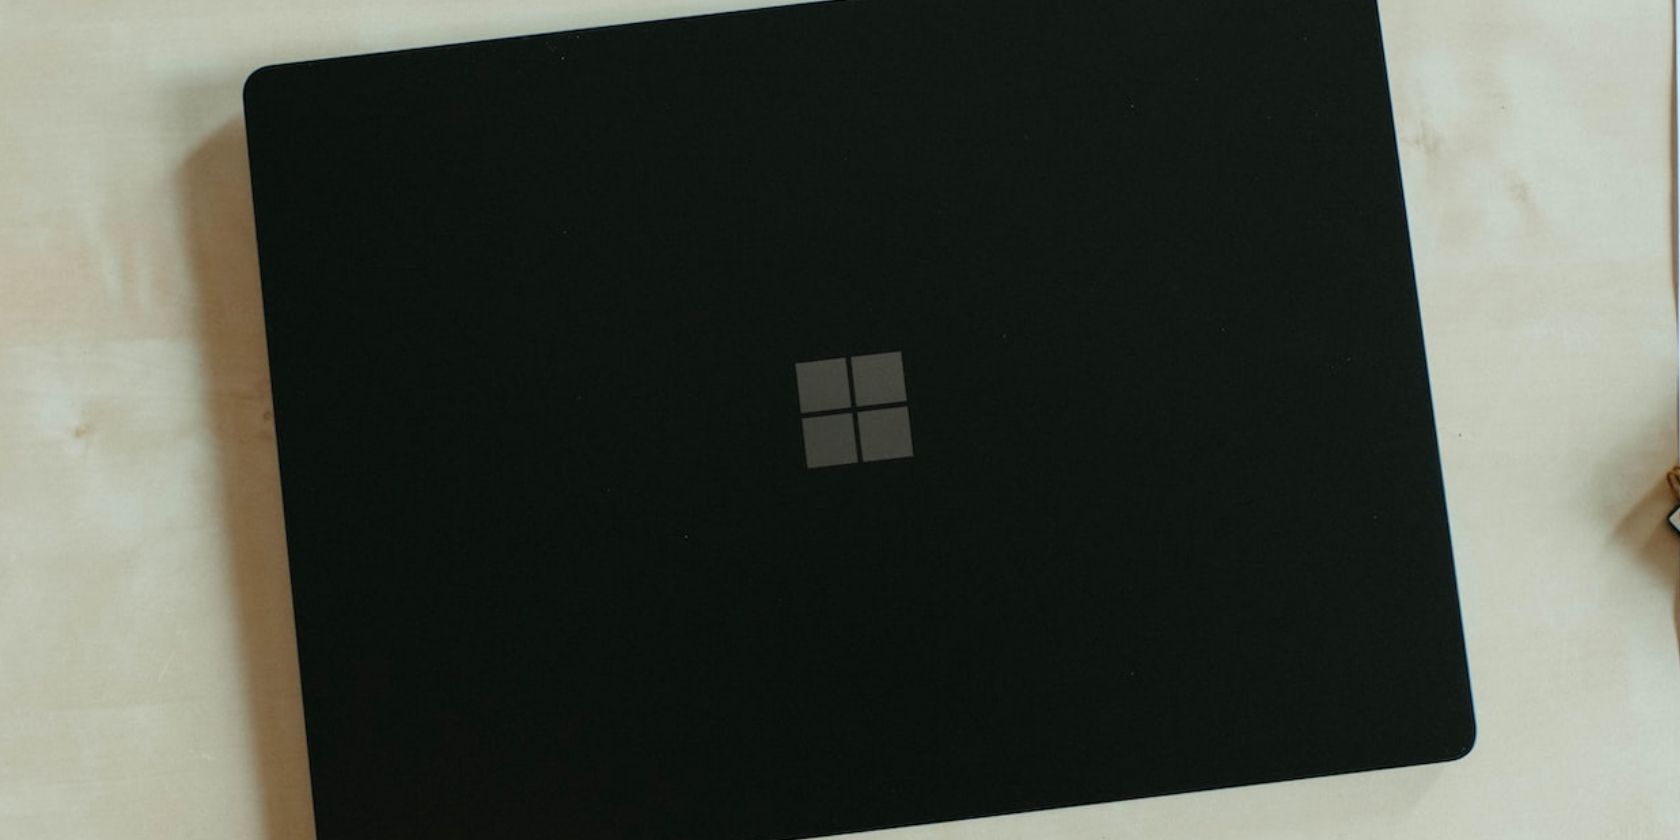 black windows laptop on a table